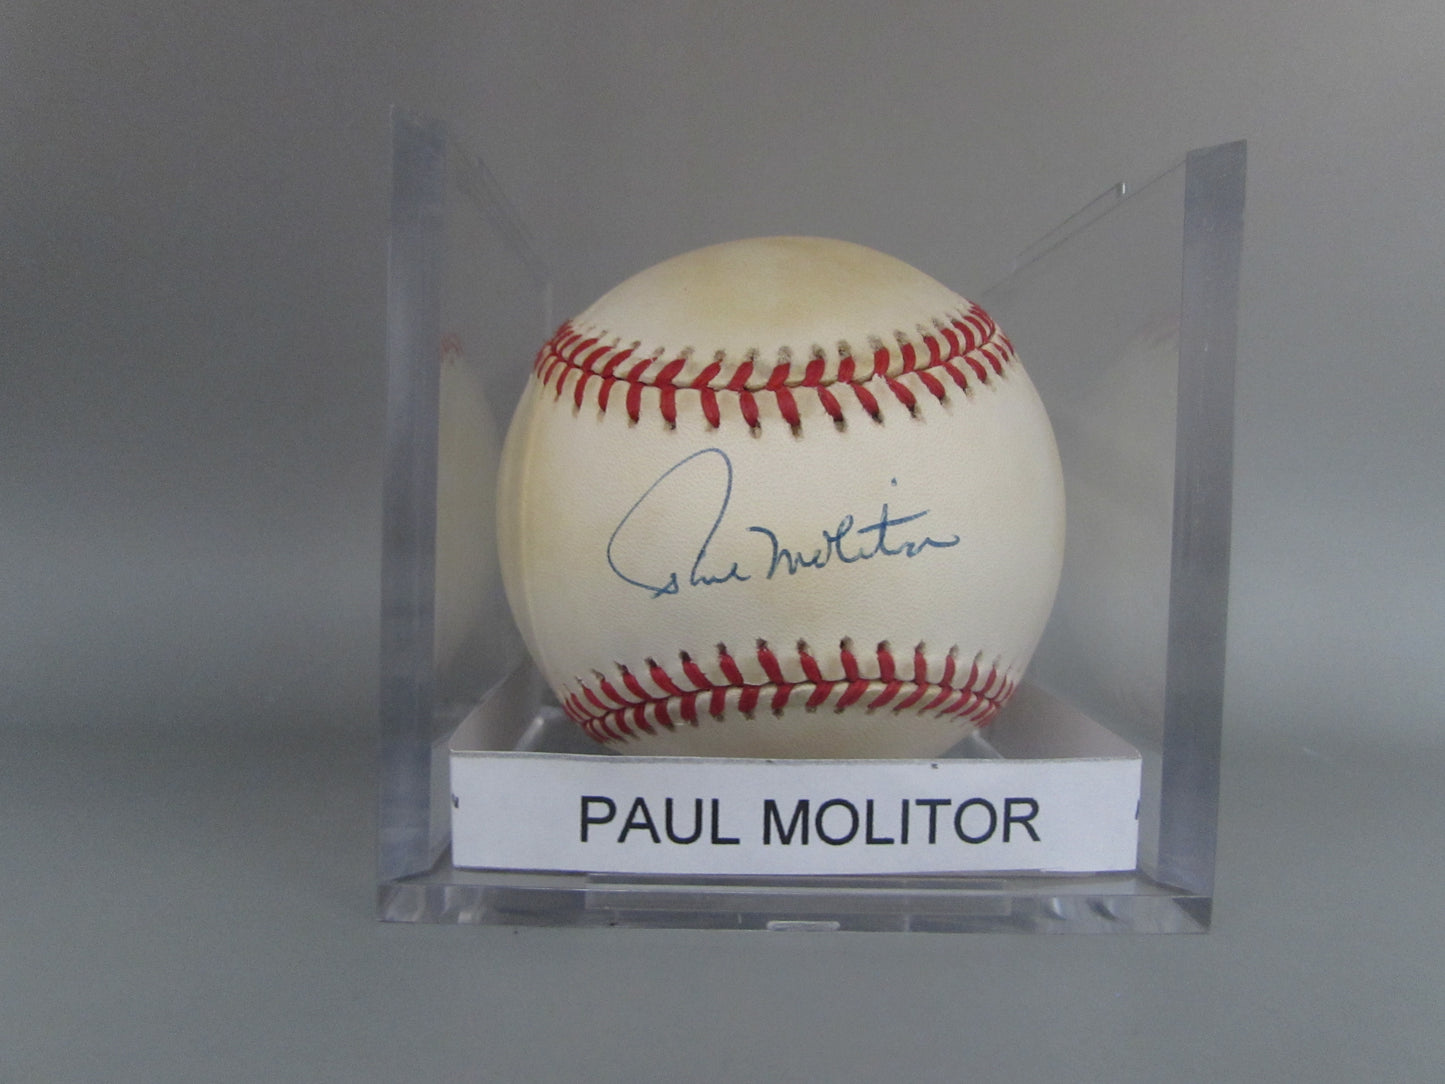 Paul Molitor signed baseball